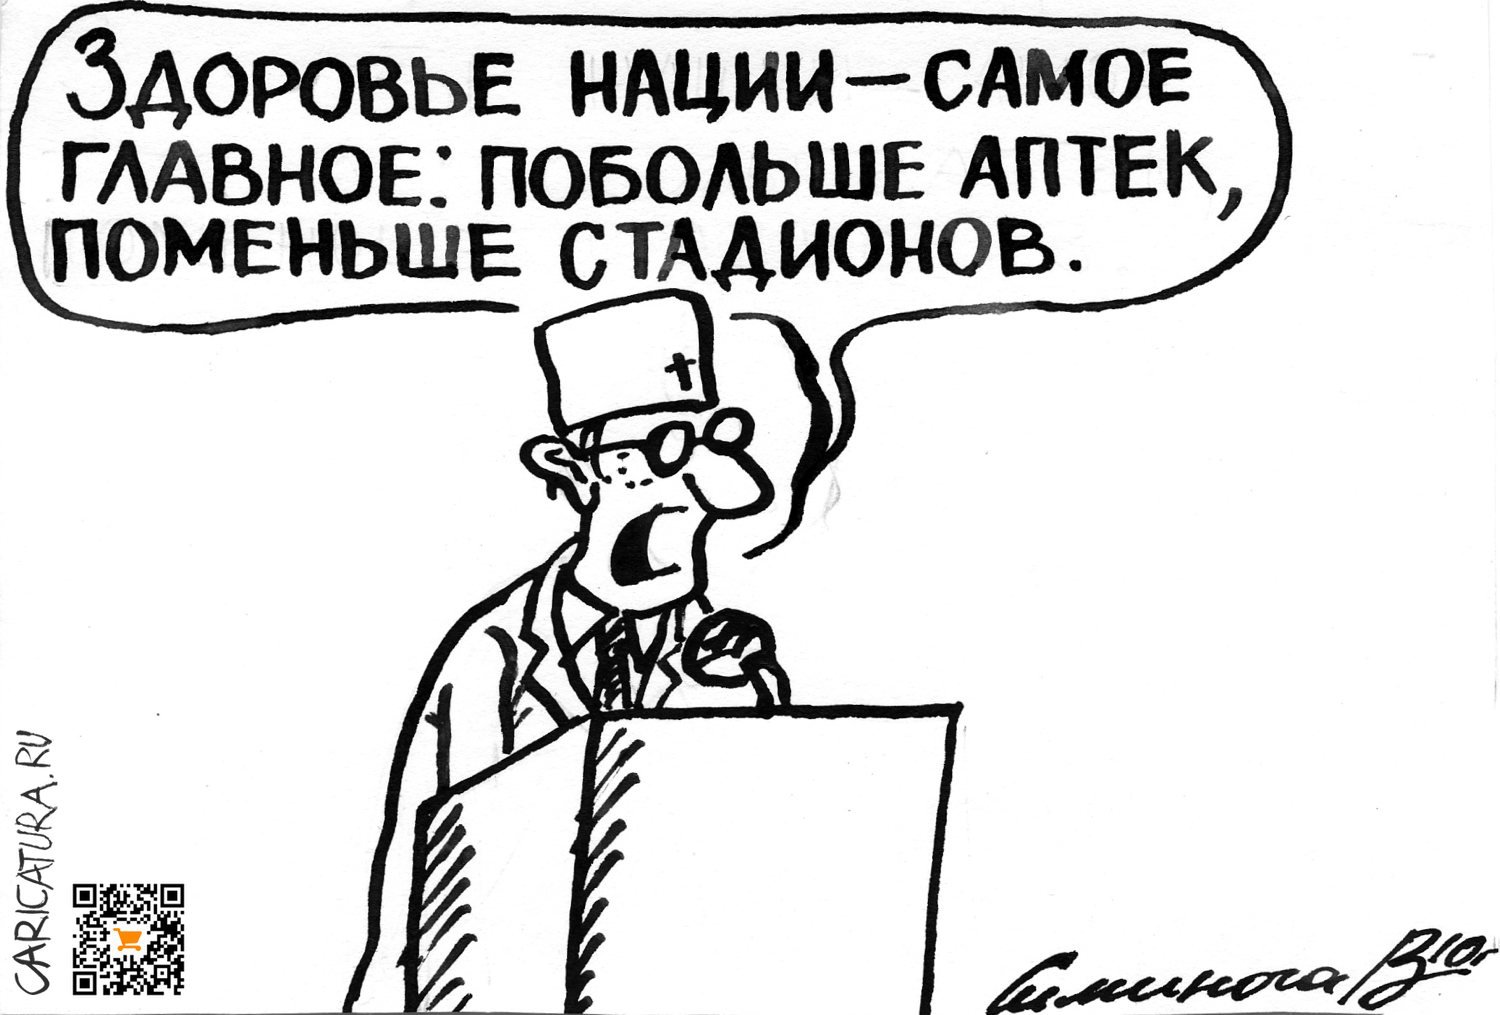 Карикатура "Самое главное", Vadim Siminoga